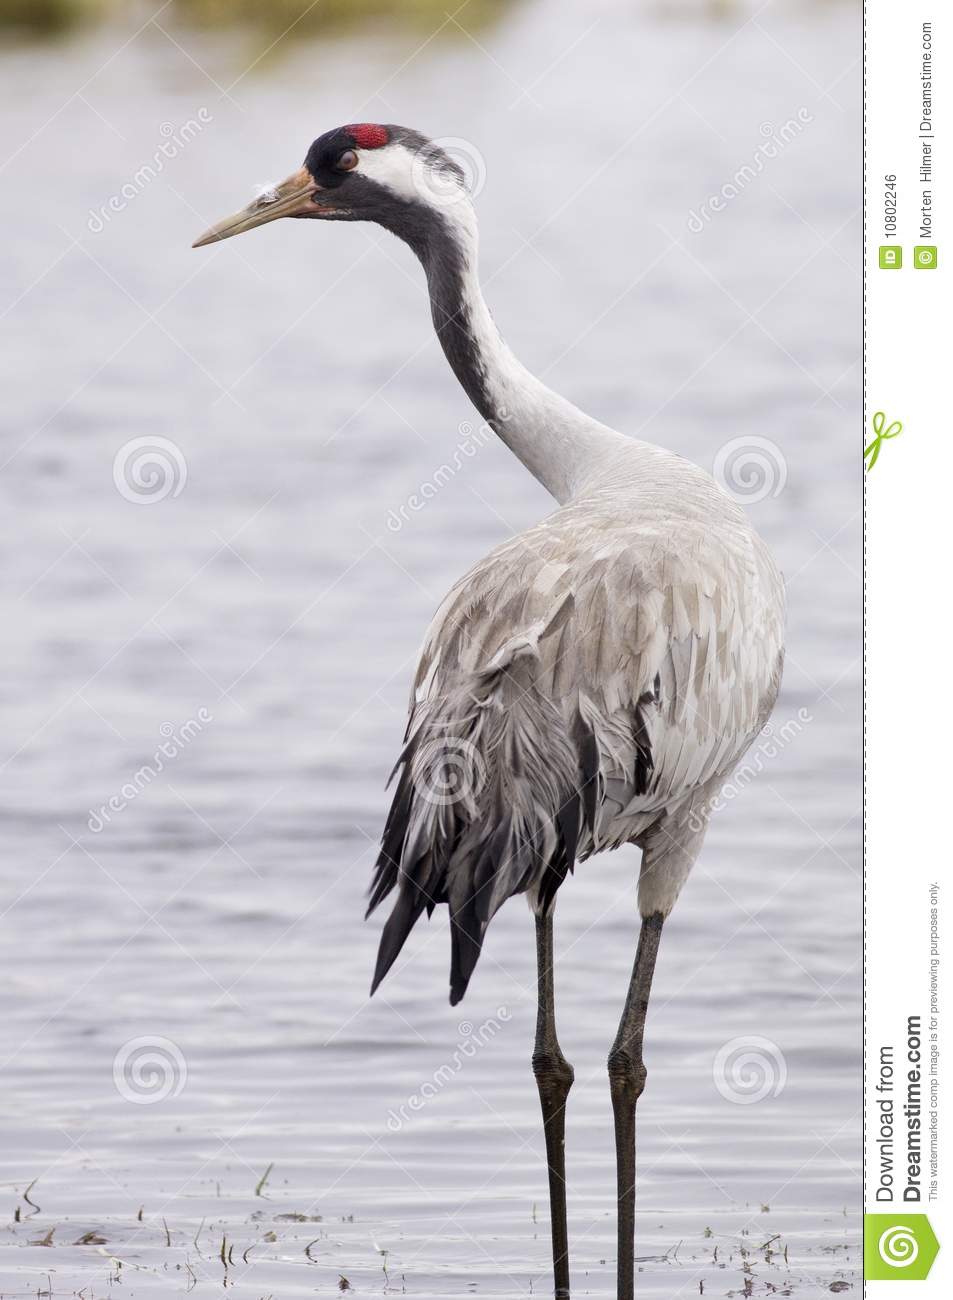 Pretty Eurasian crane